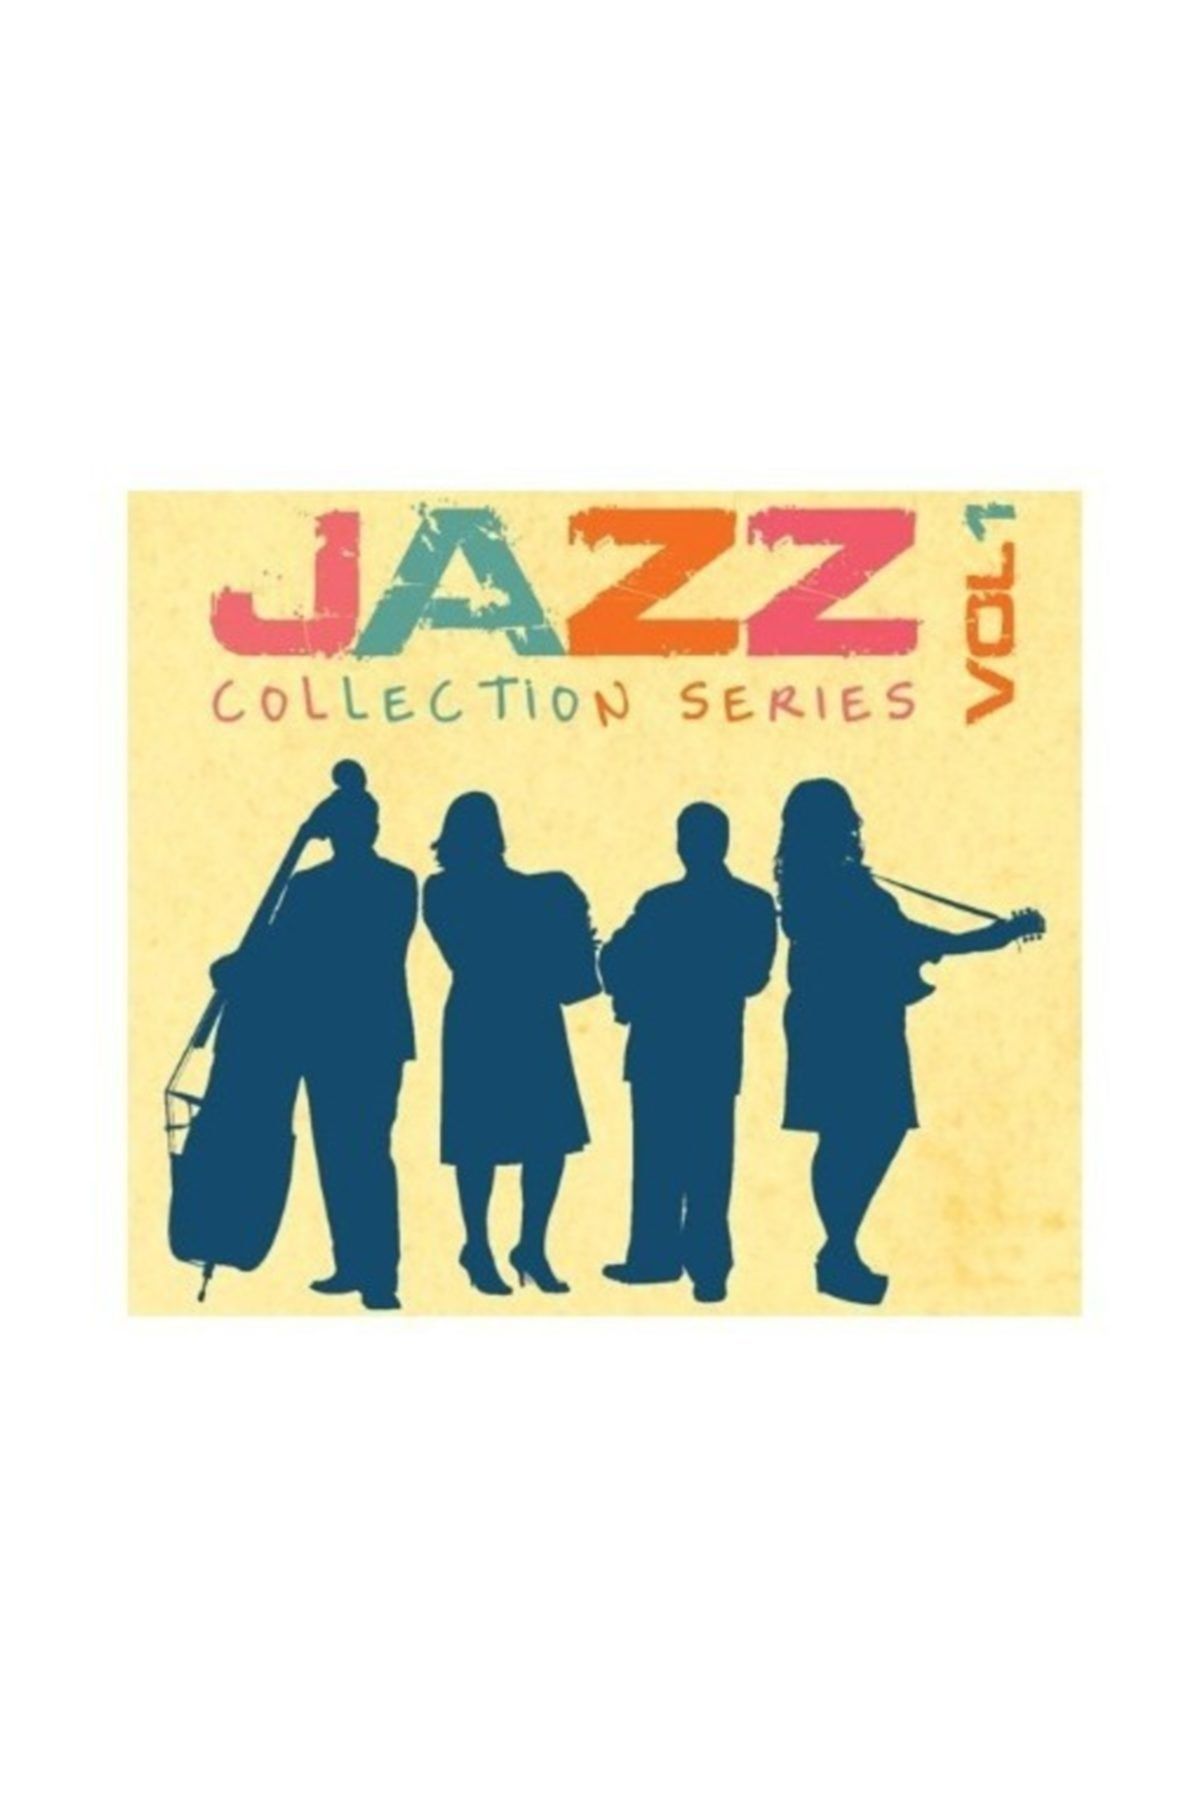 Pal Cd - Jazz Collection Series Vol.1 (5 Cd Box Set)